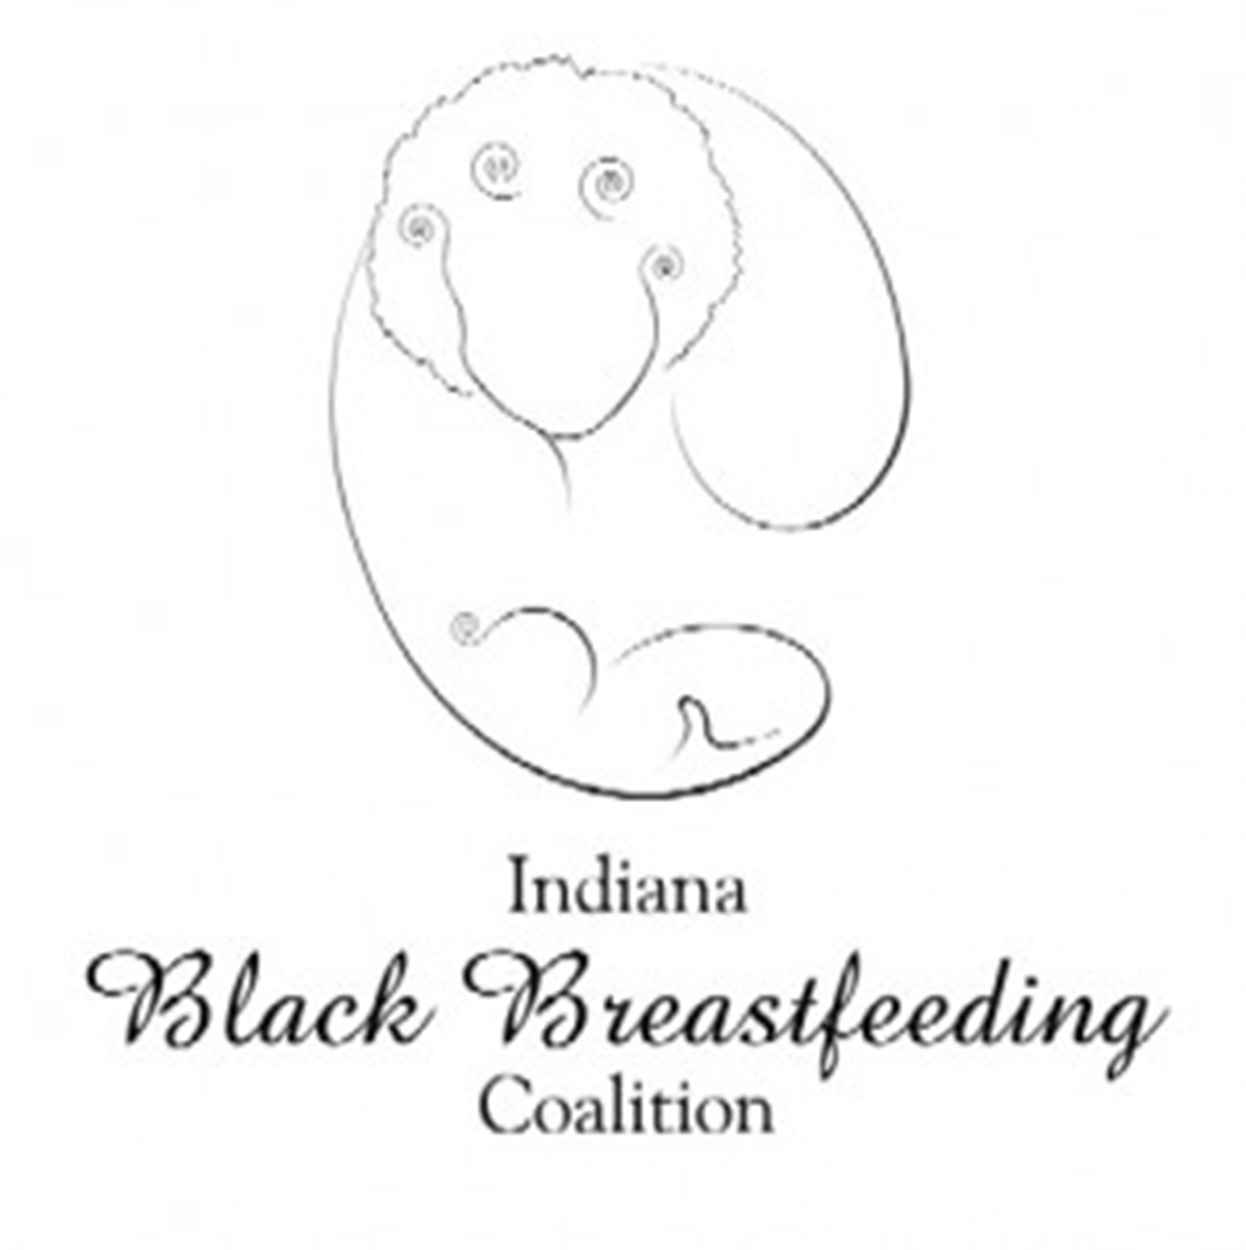 Indiana Black breastfeeding Coalition.jpg